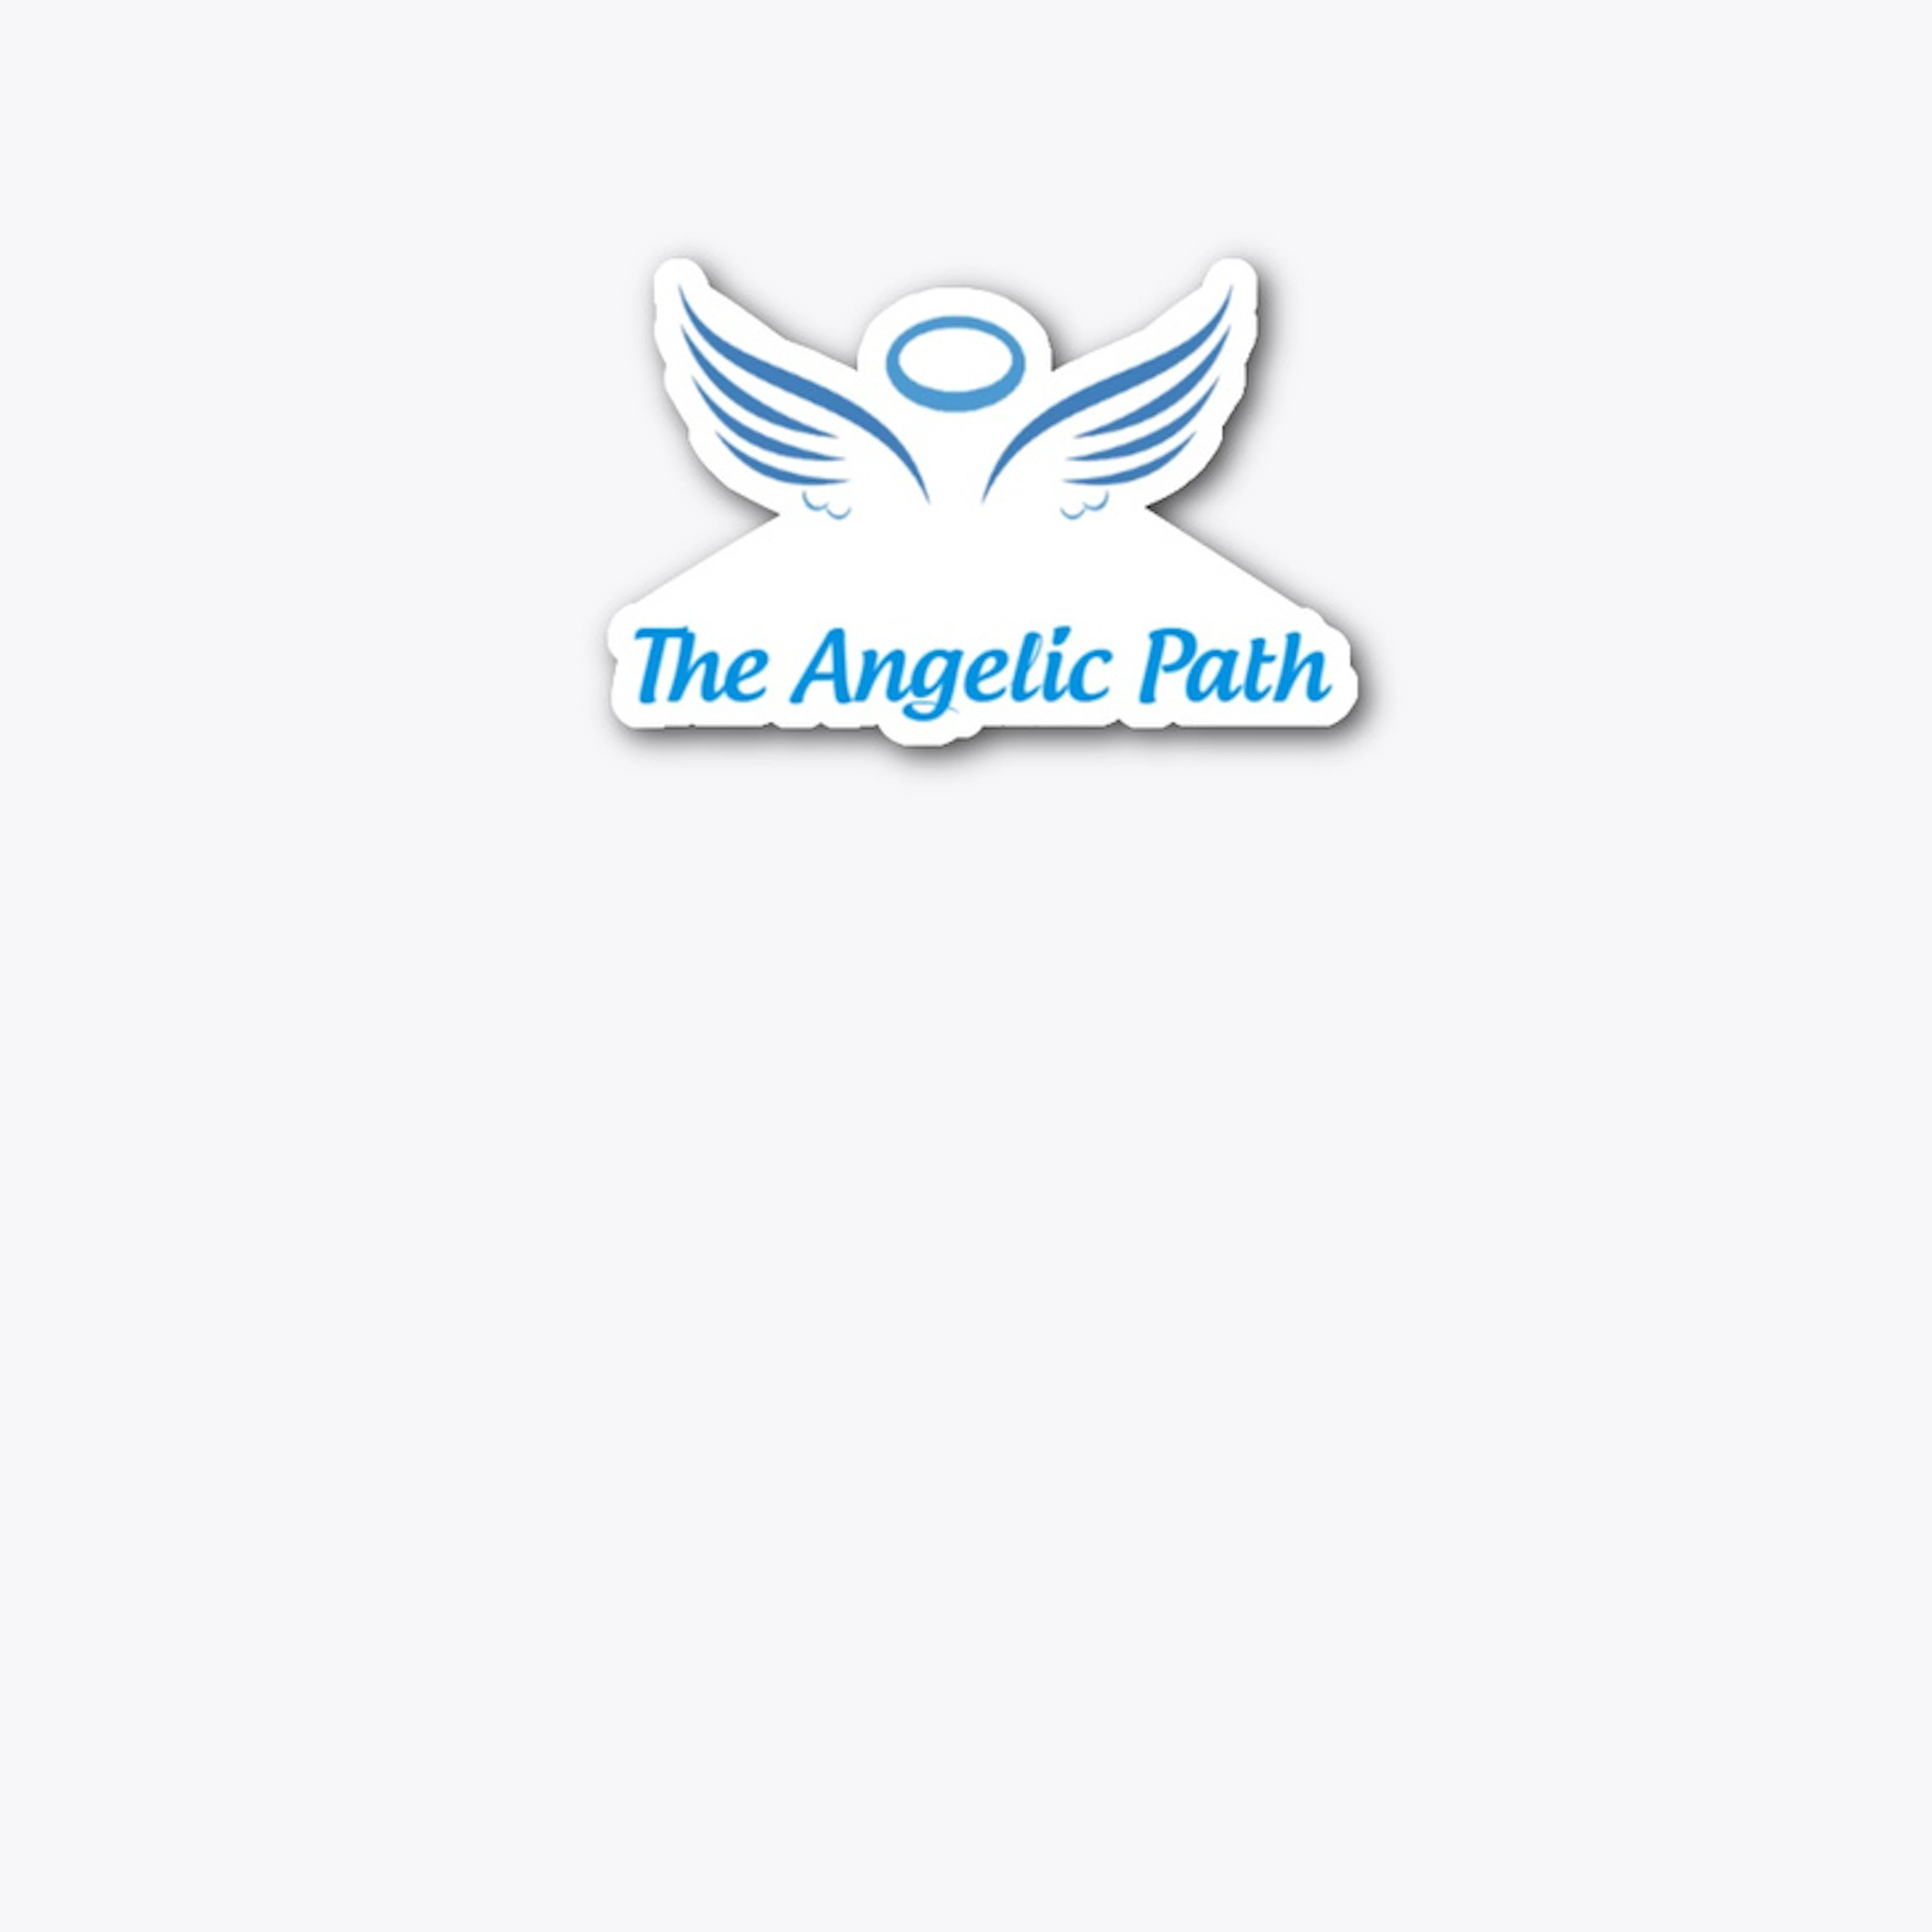 The Angelic Path